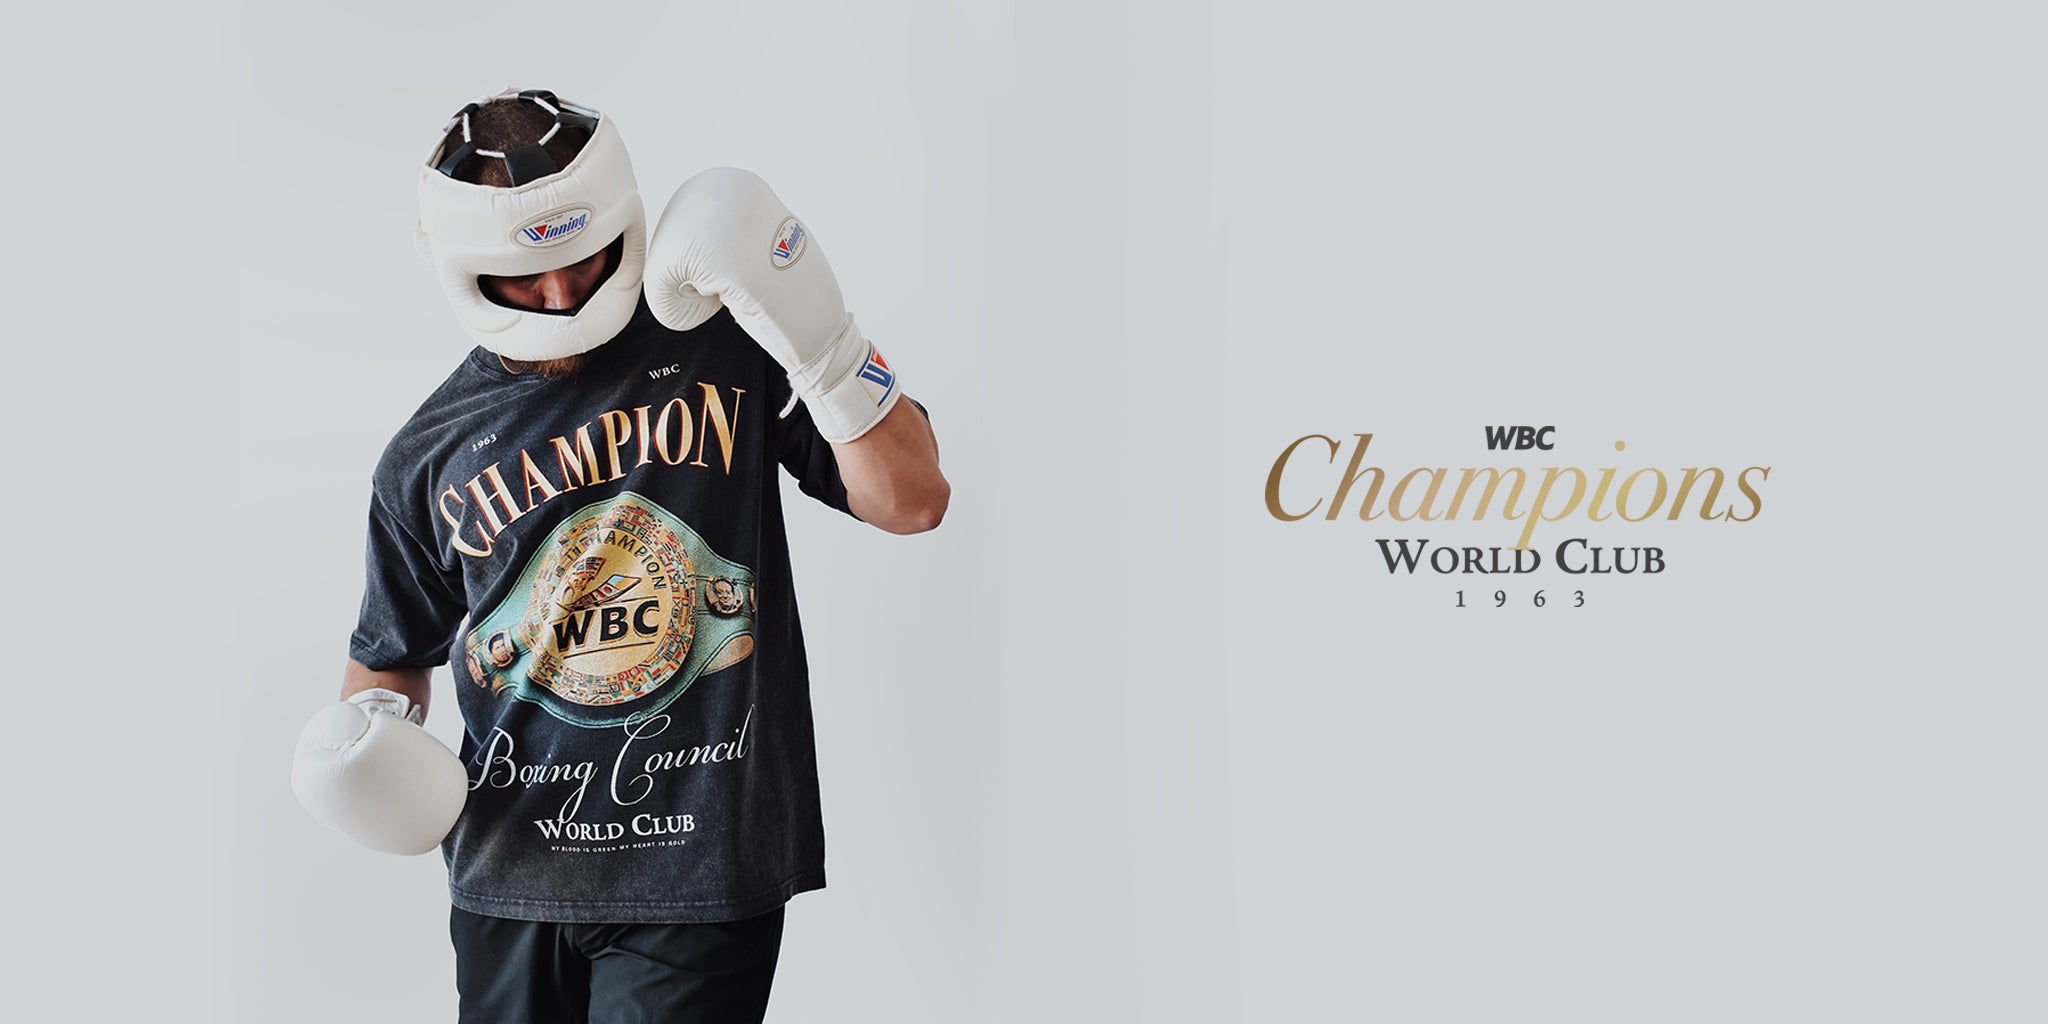 WBC Champions World Club 1963